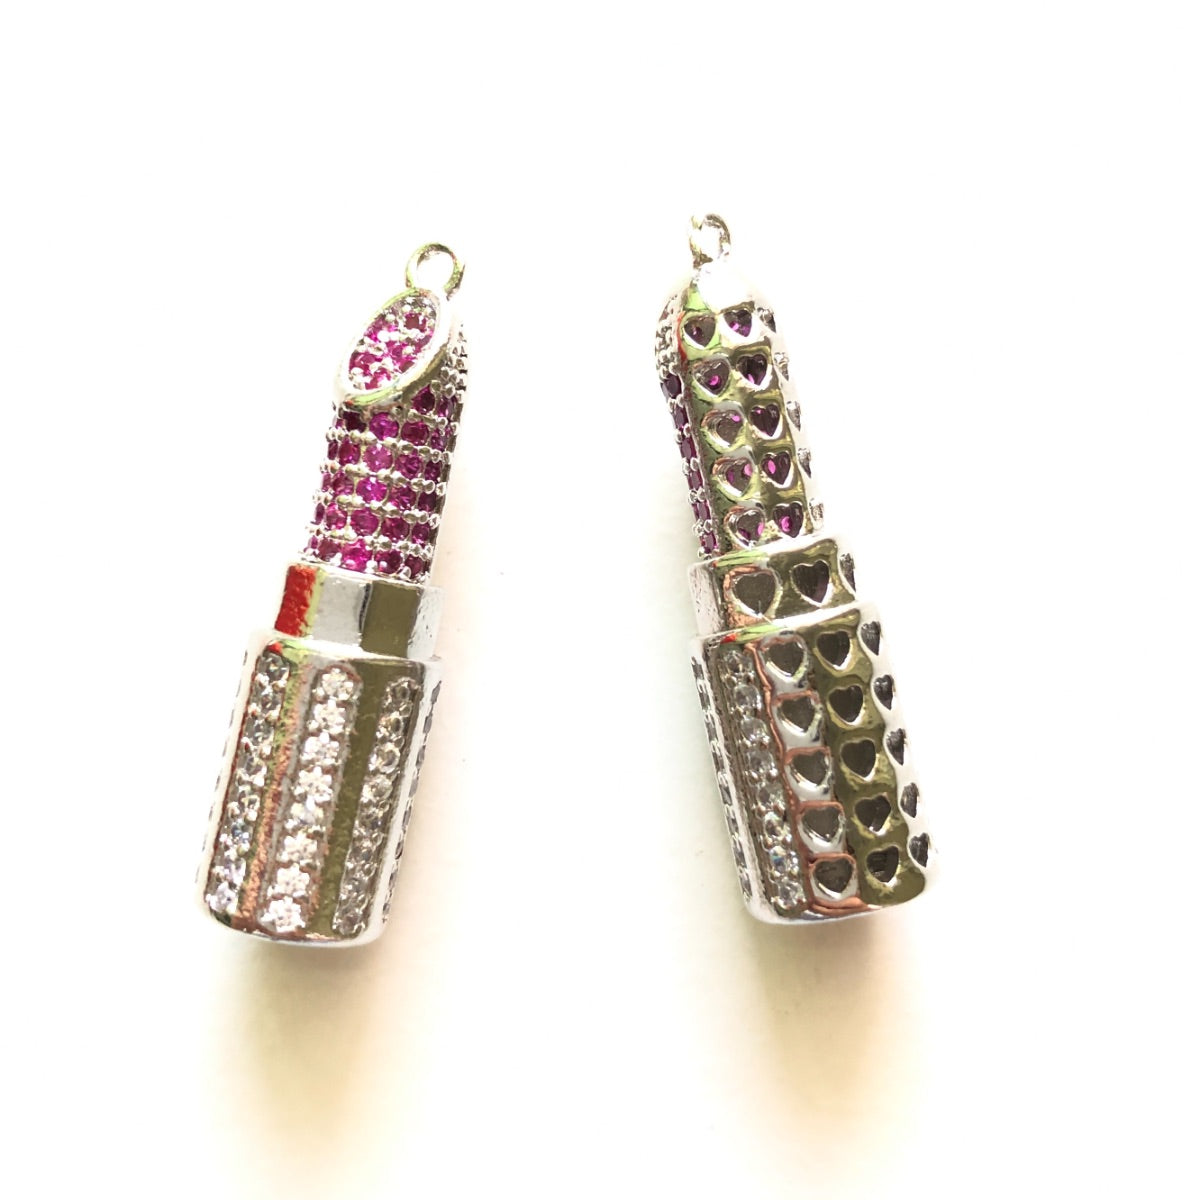 10pcs/lot 35*10mm CZ Paved Lipstick Charms Silver CZ Paved Charms Fashion On Sale Charms Beads Beyond